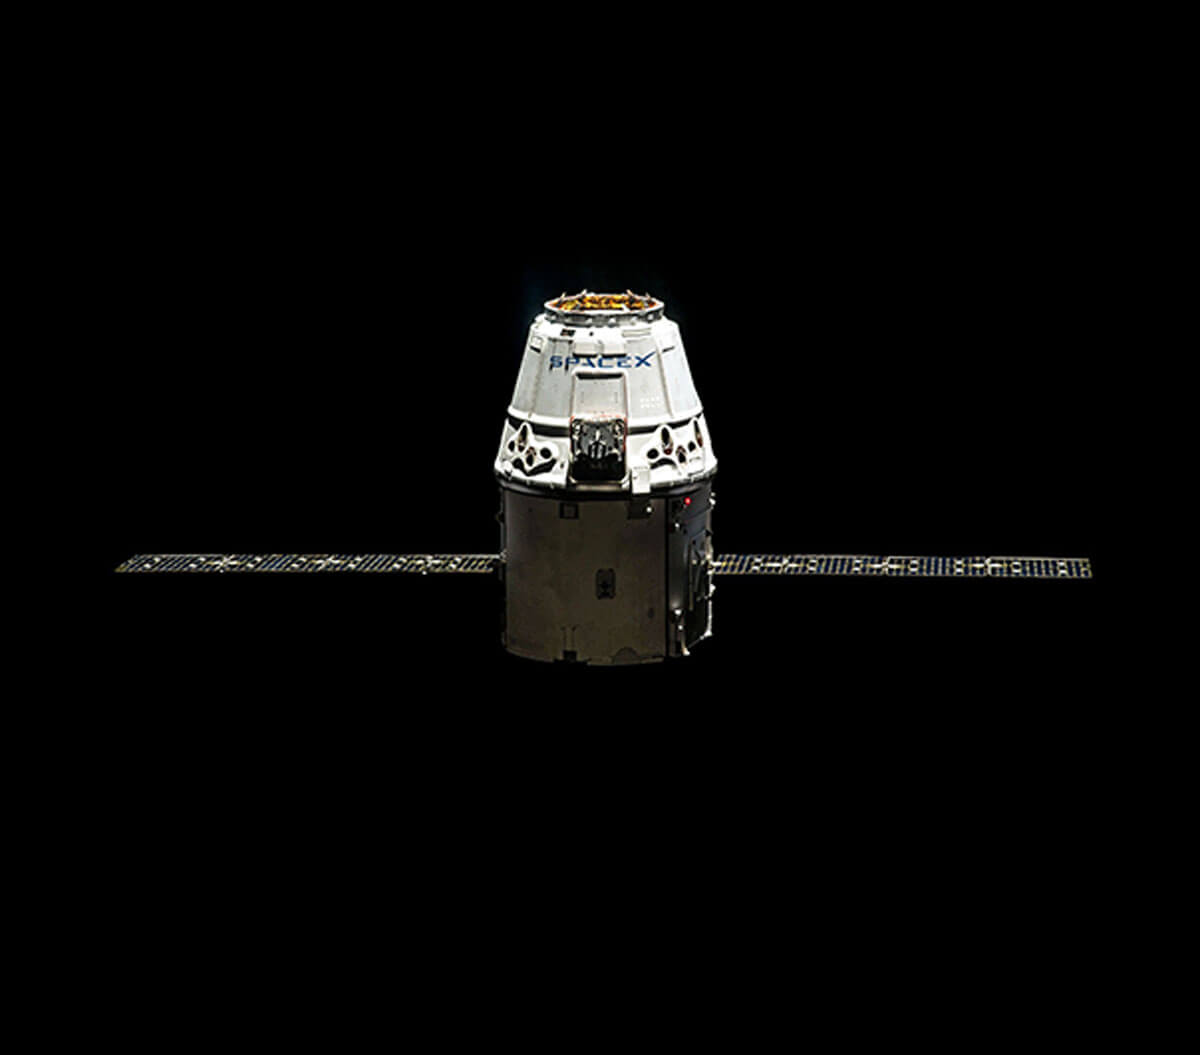 satellite floating in space